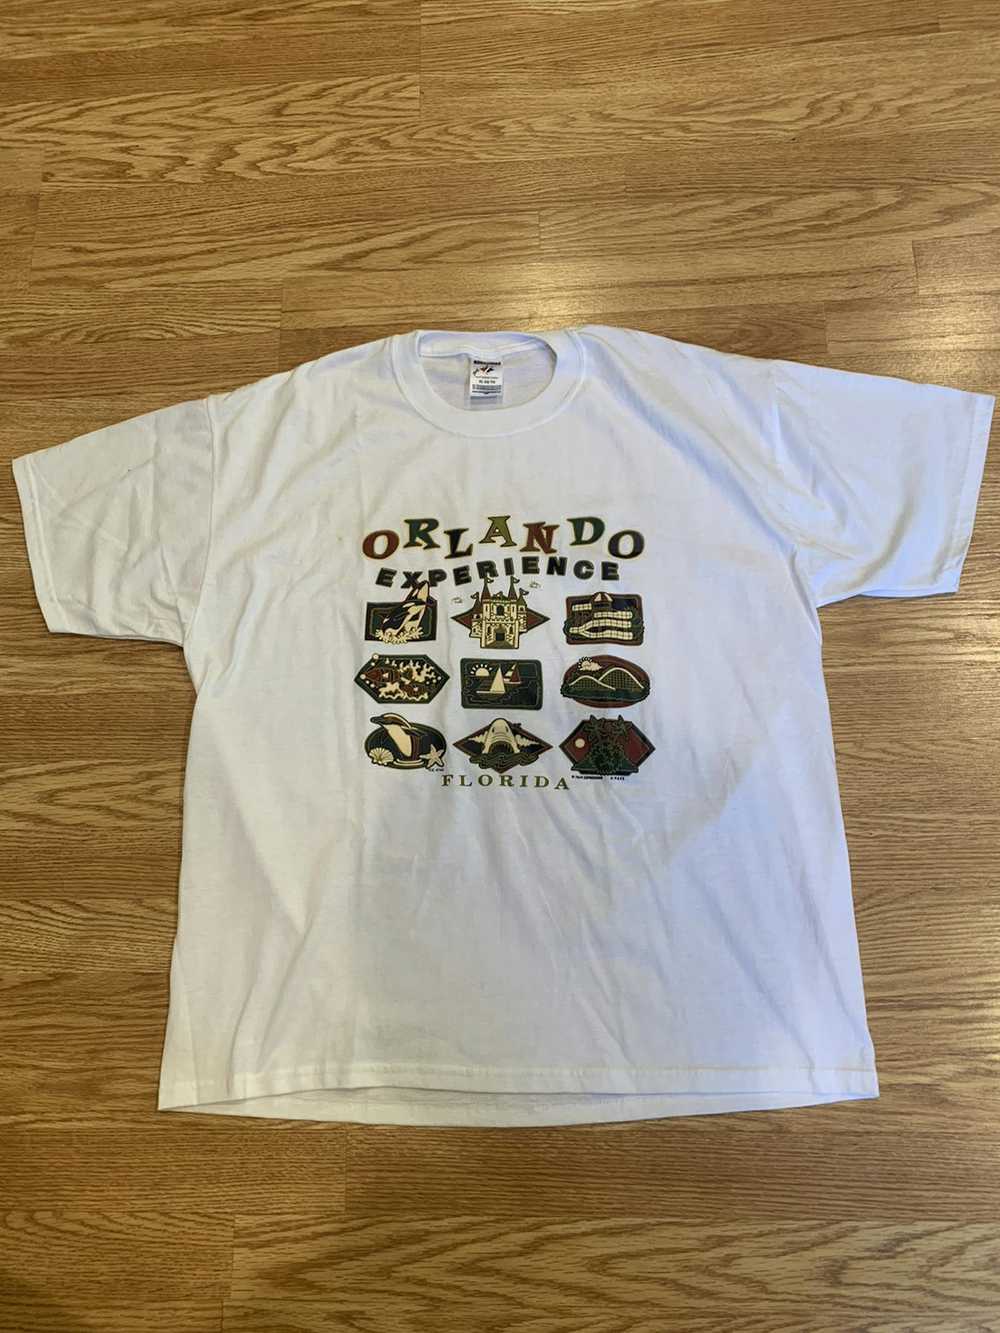 Vintage Orlando Experience 90’s T-shirt - image 2